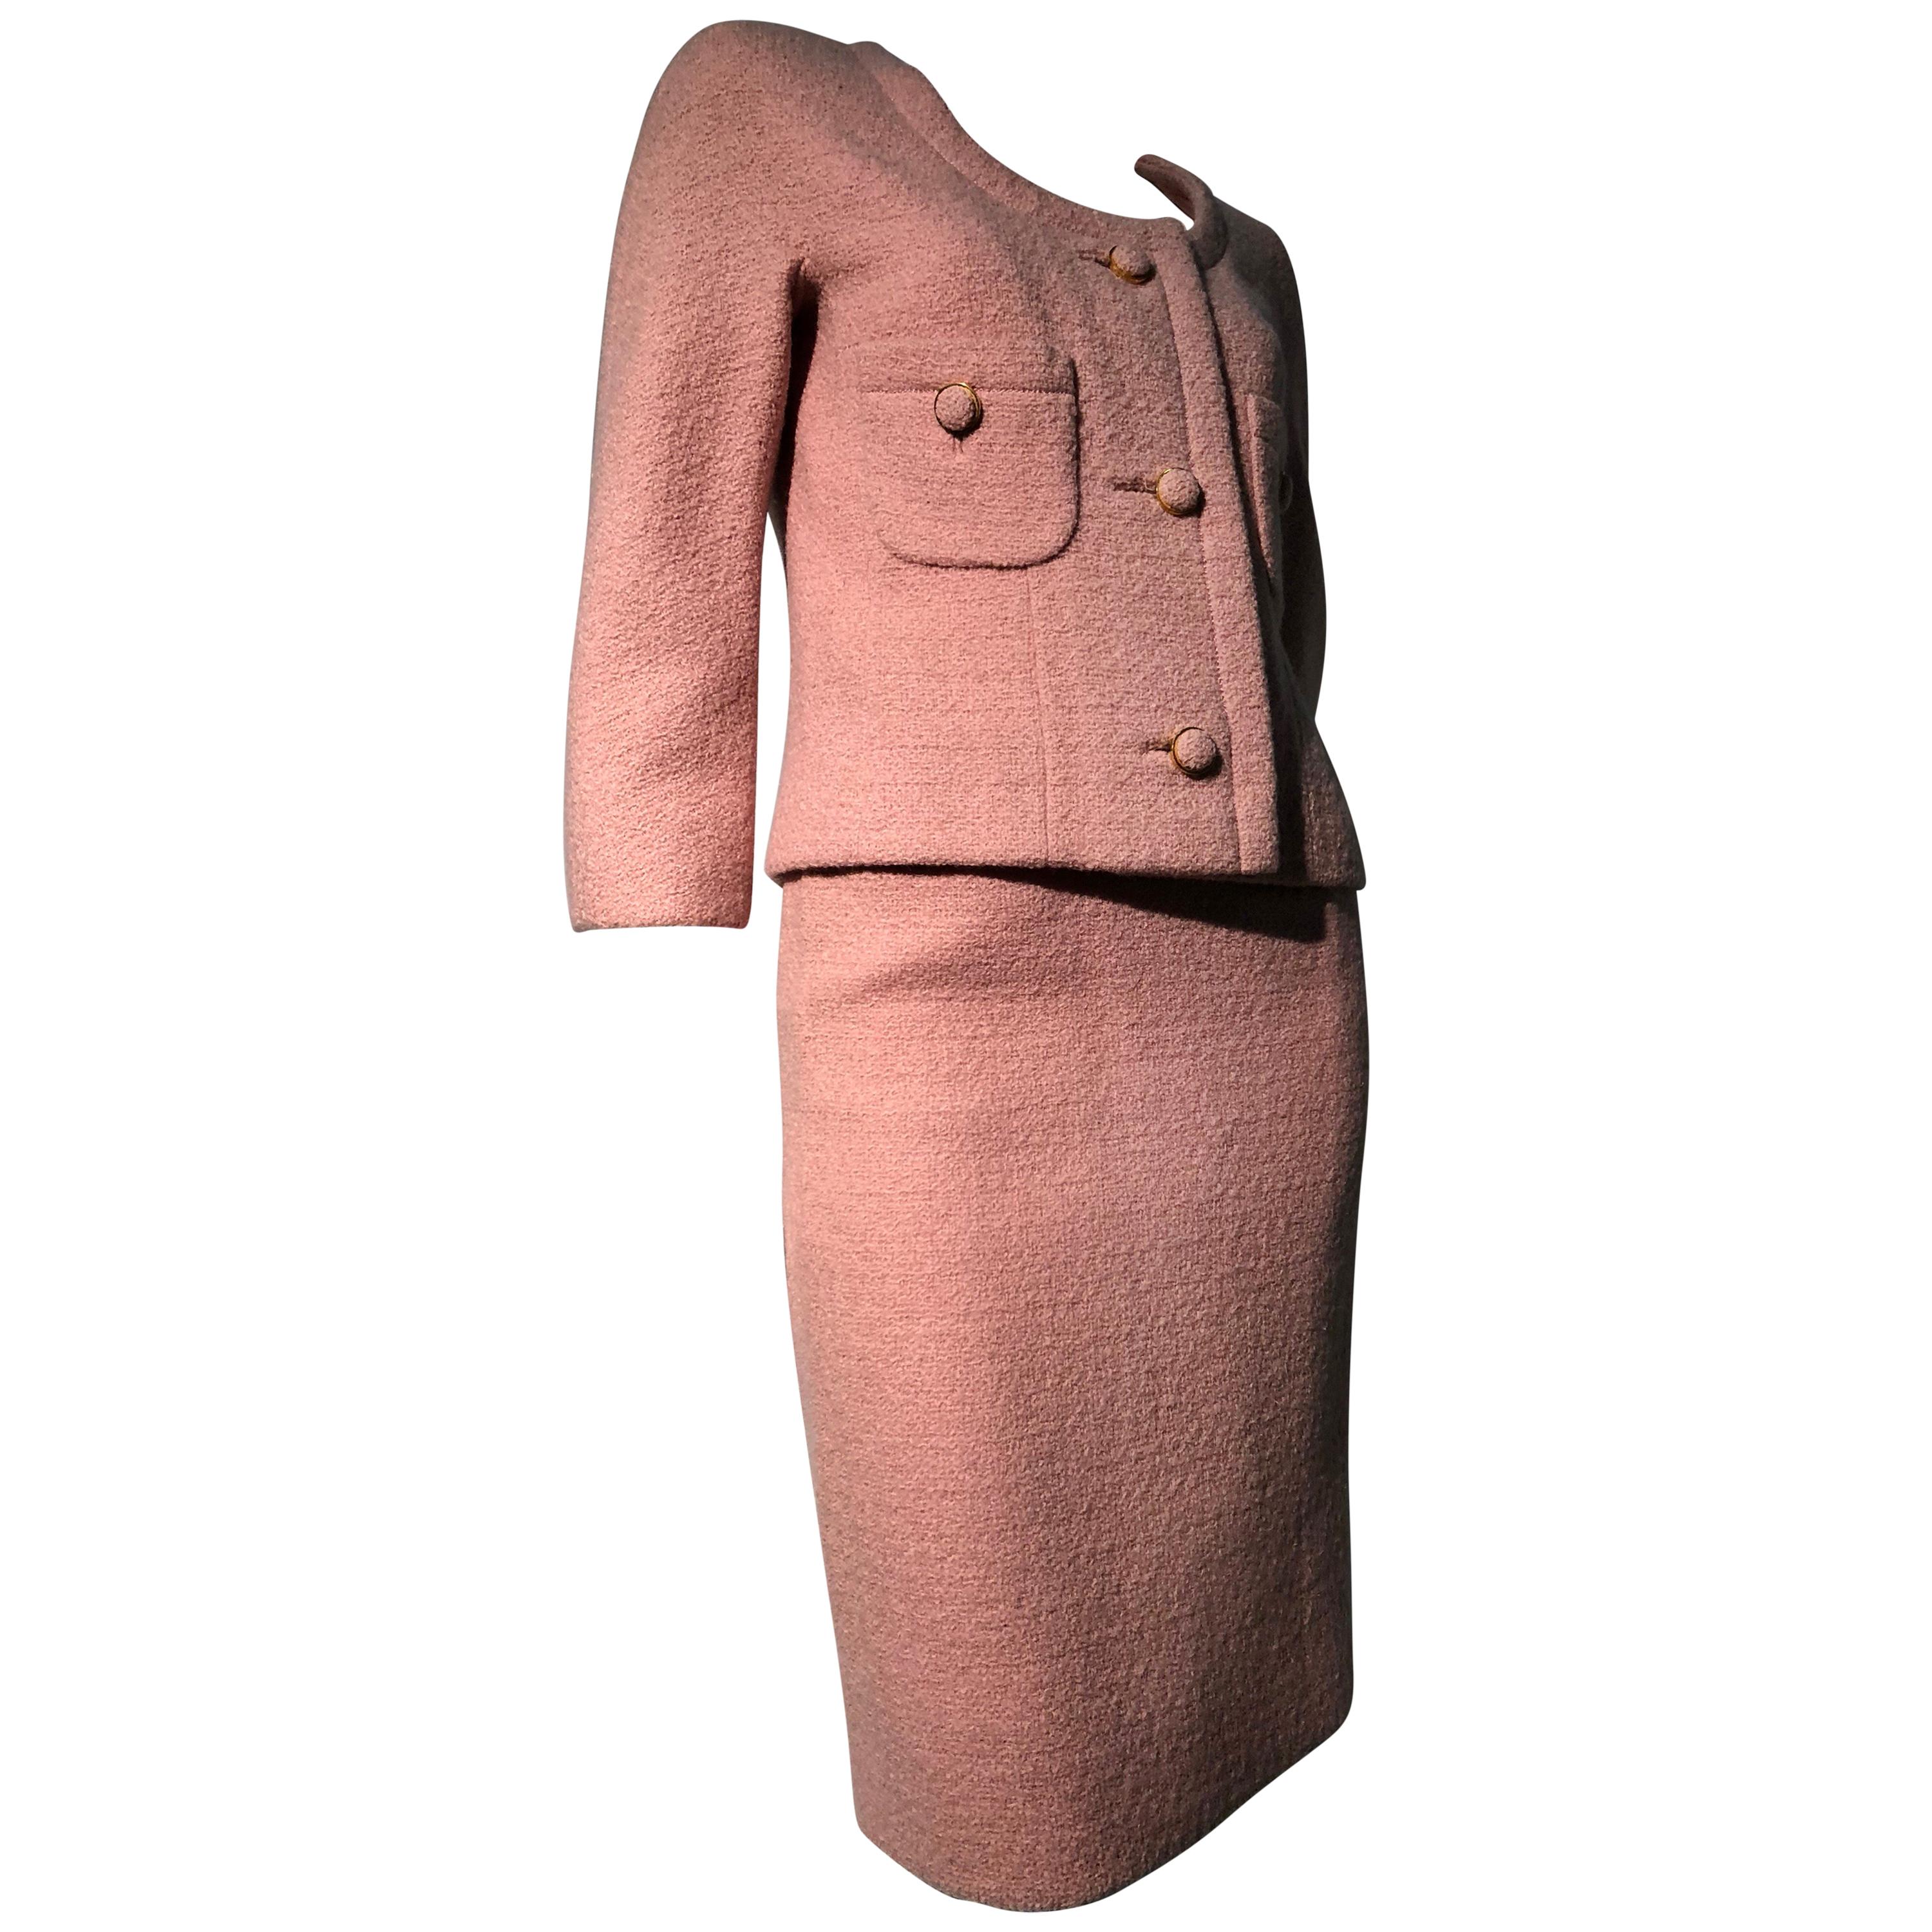 Christian Dior Frühjahrs-Minirock-Anzug aus Wolle Boucl in Altrosa, 1960er Jahre